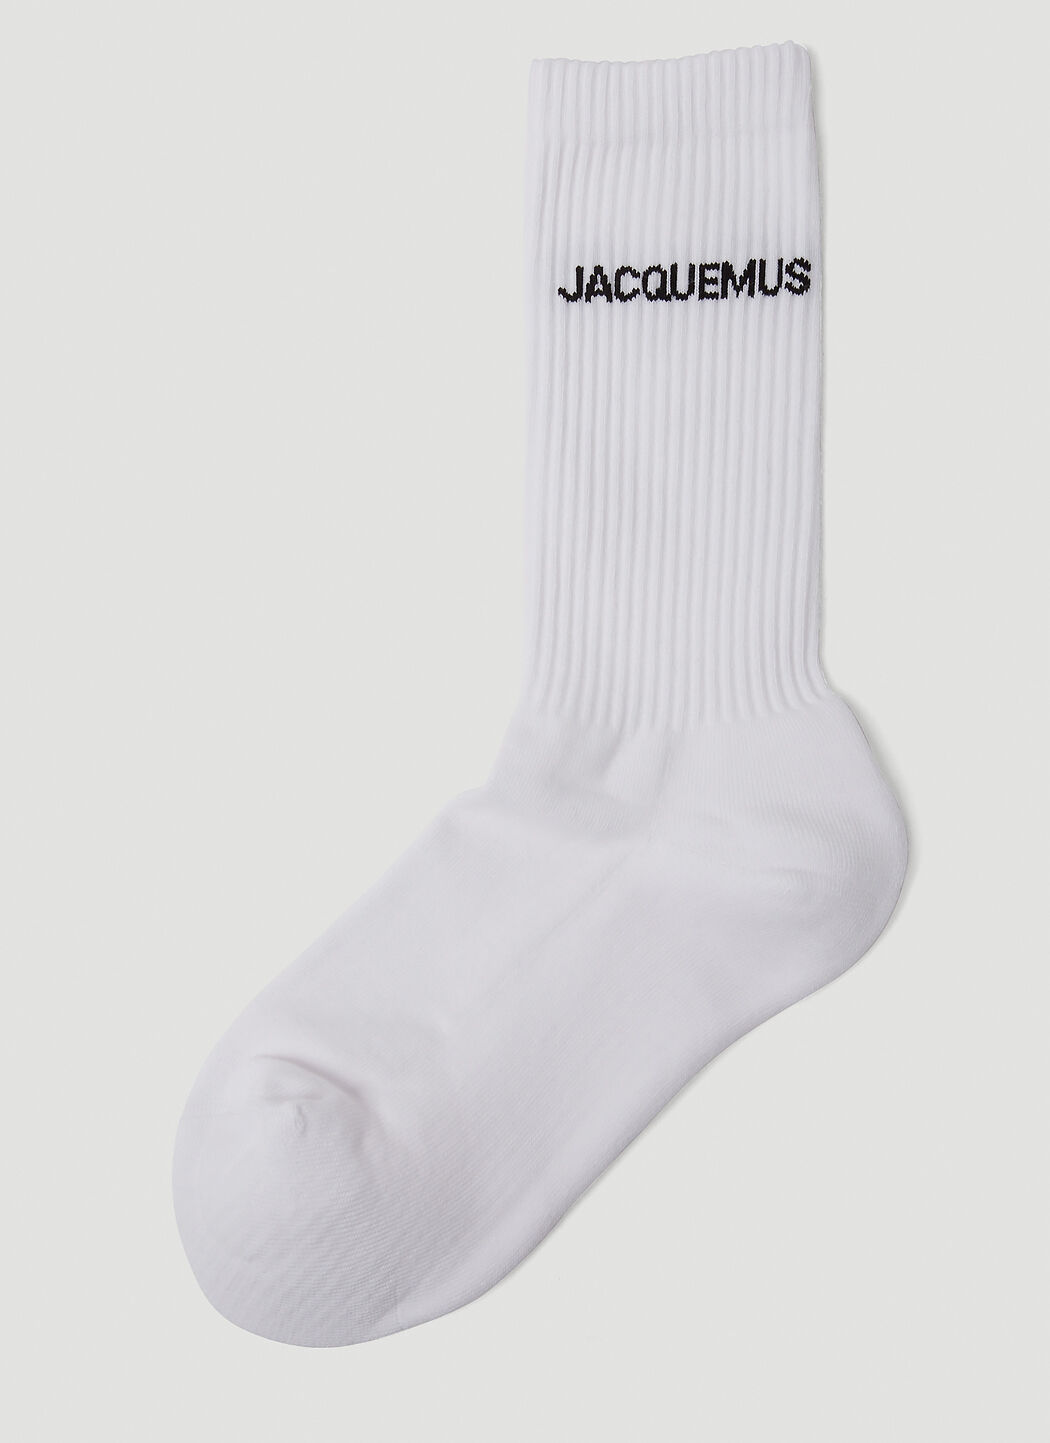 Y-3 Les Chaussettes Socks White yyy0356030